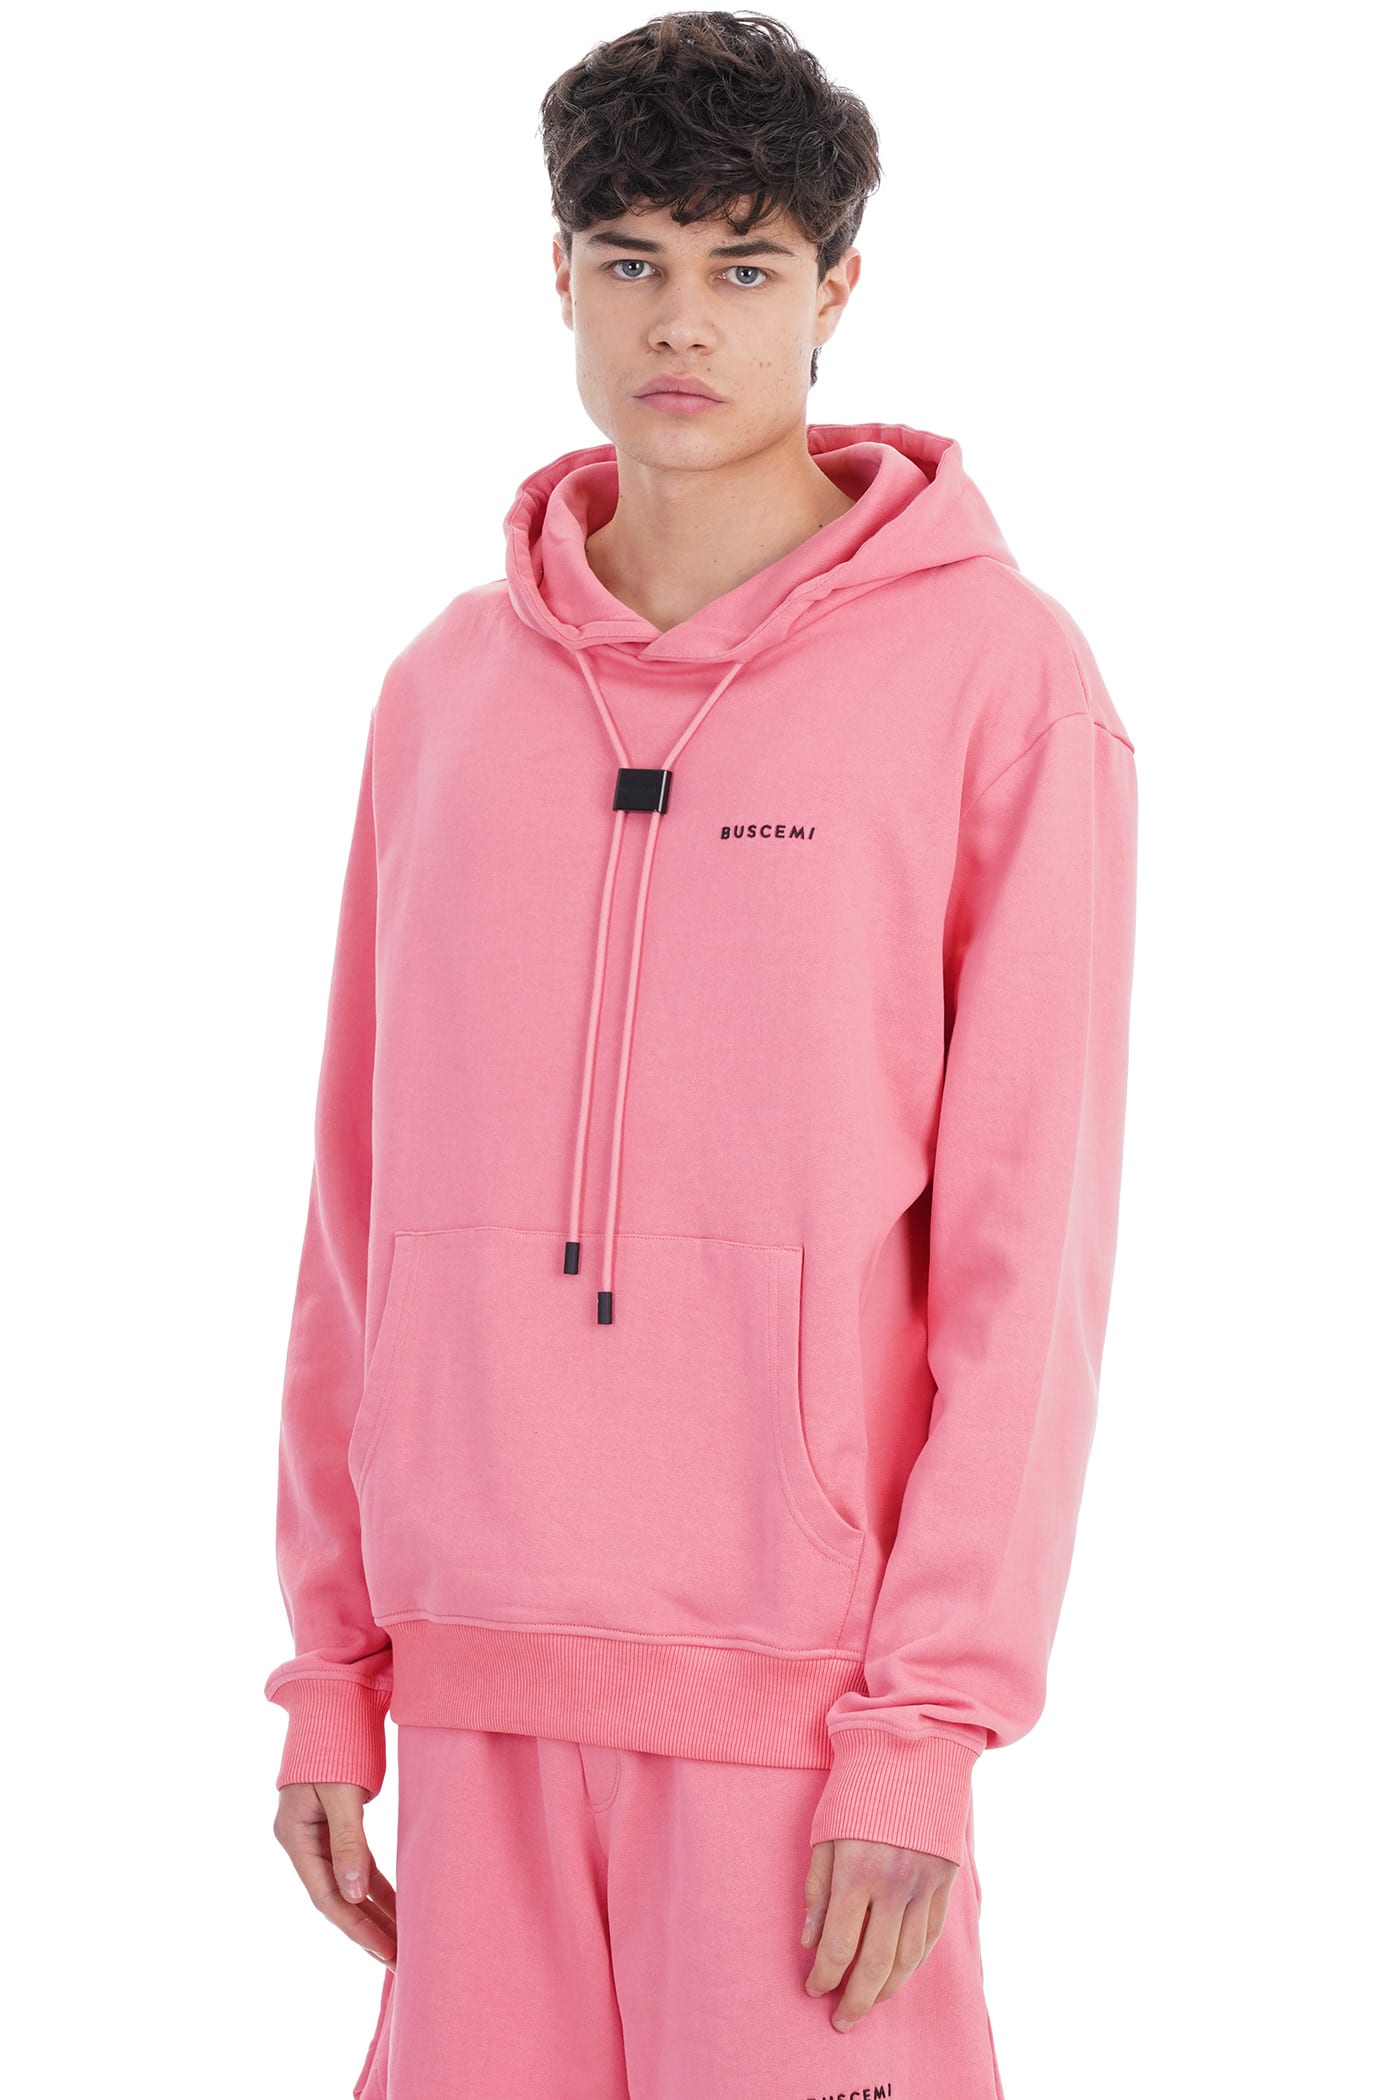 Buscemi Sweatshirt In Rose-pink Cotton